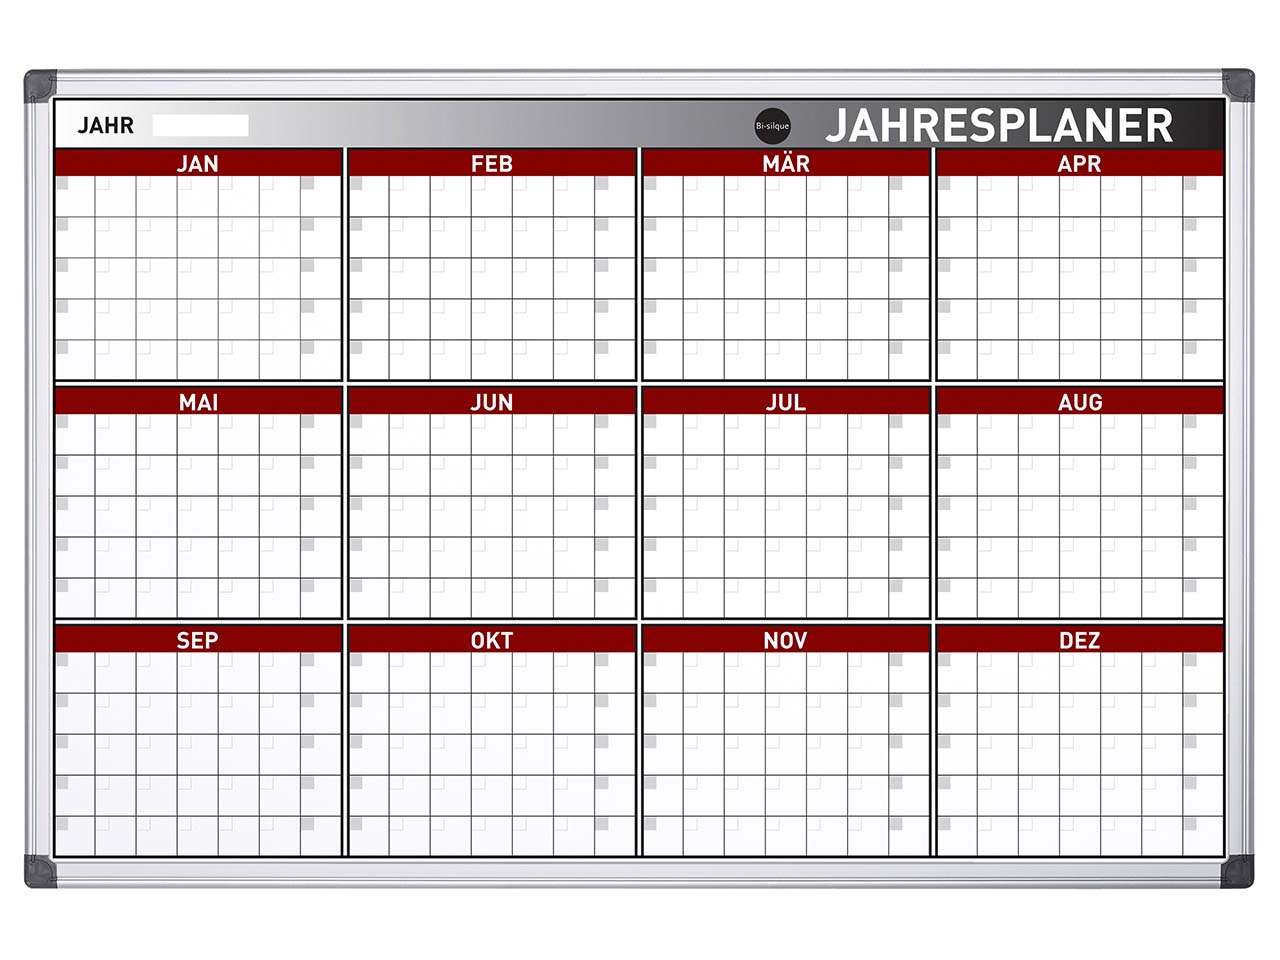 3 year plan. Календарь для заметок. Настенный планер на год. Расписание на месяц. Календарь на год для заметок.